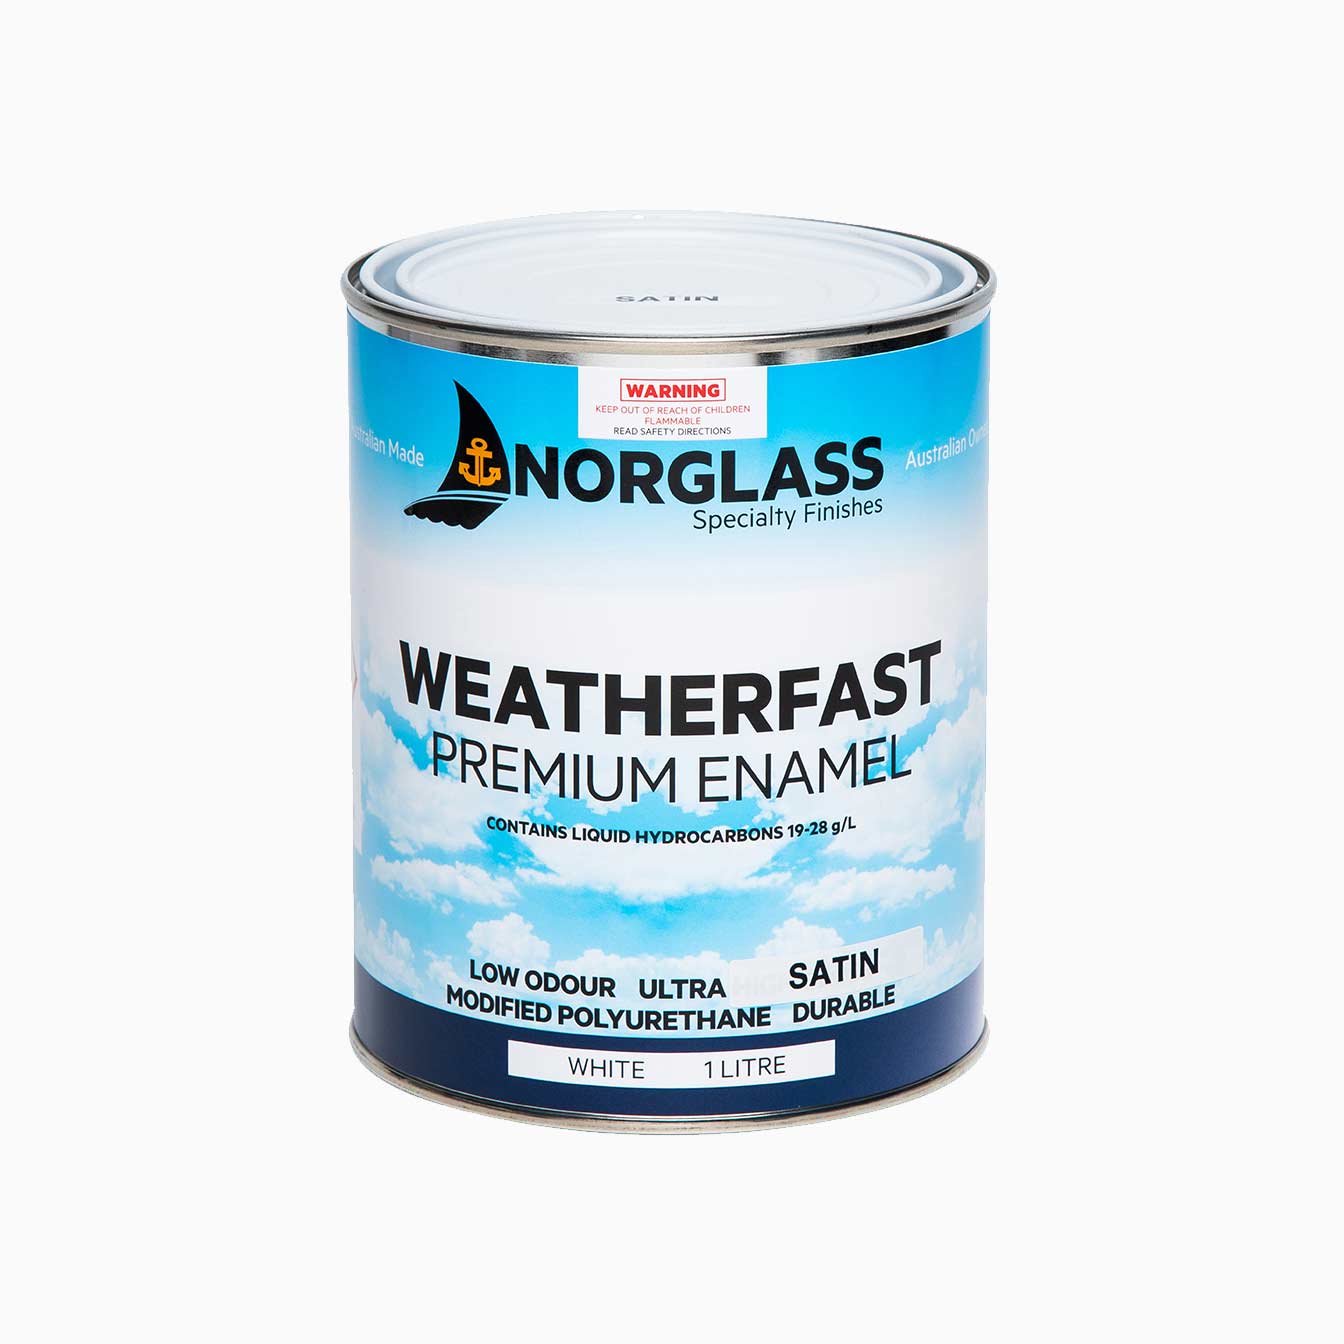 Weatherfast Premium Enamel Satin